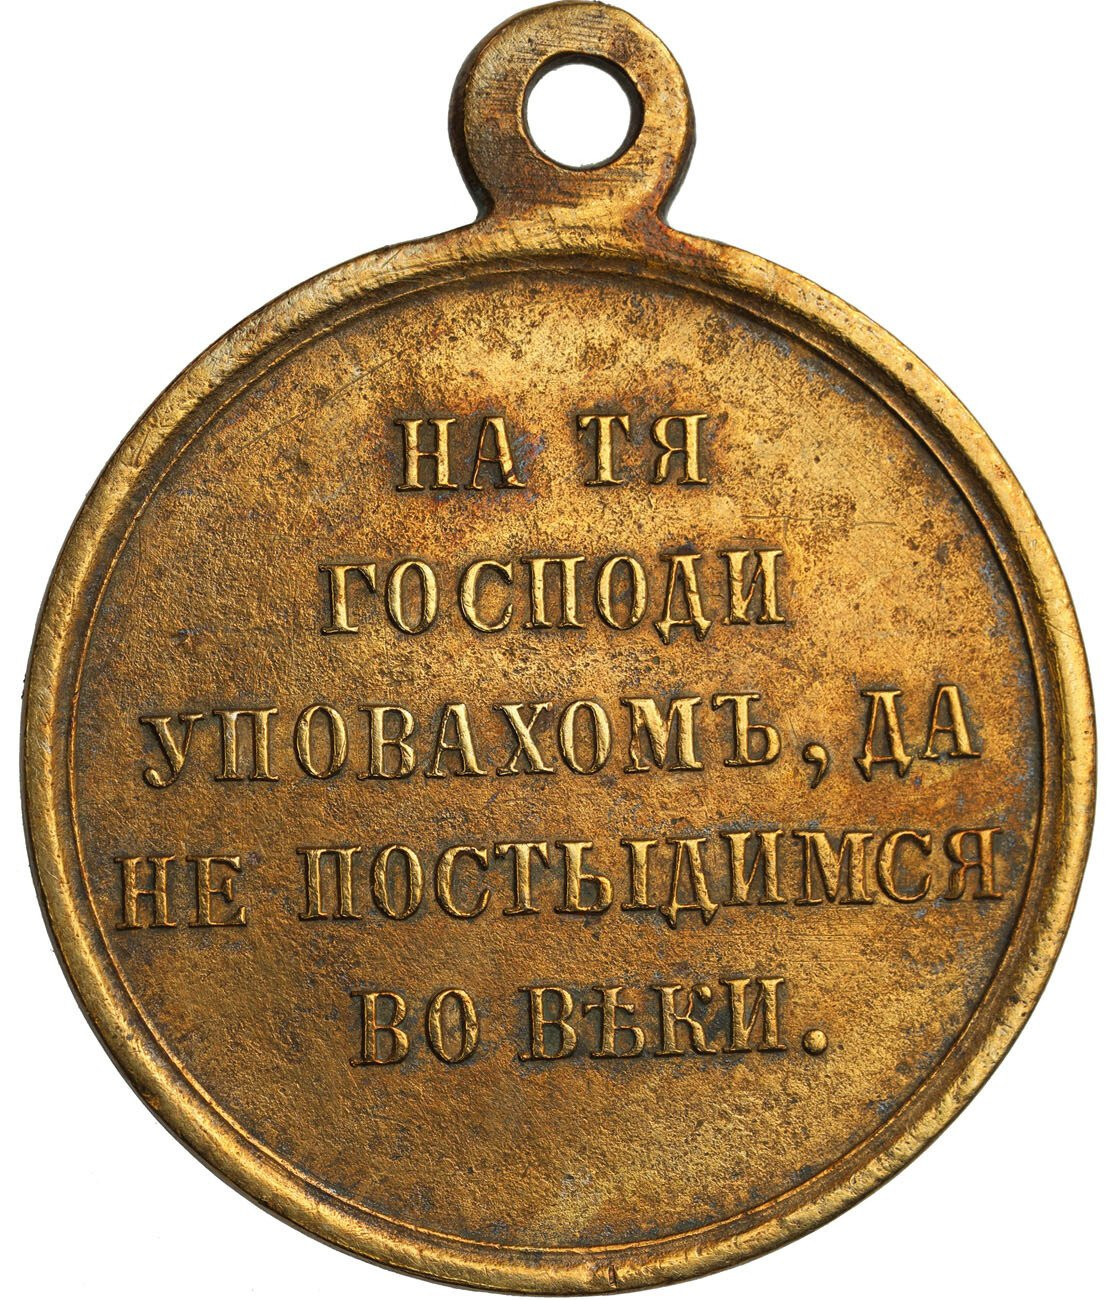 Rosja. Aleksander II. Medal za wojnę krymską 1853-1856, brąz